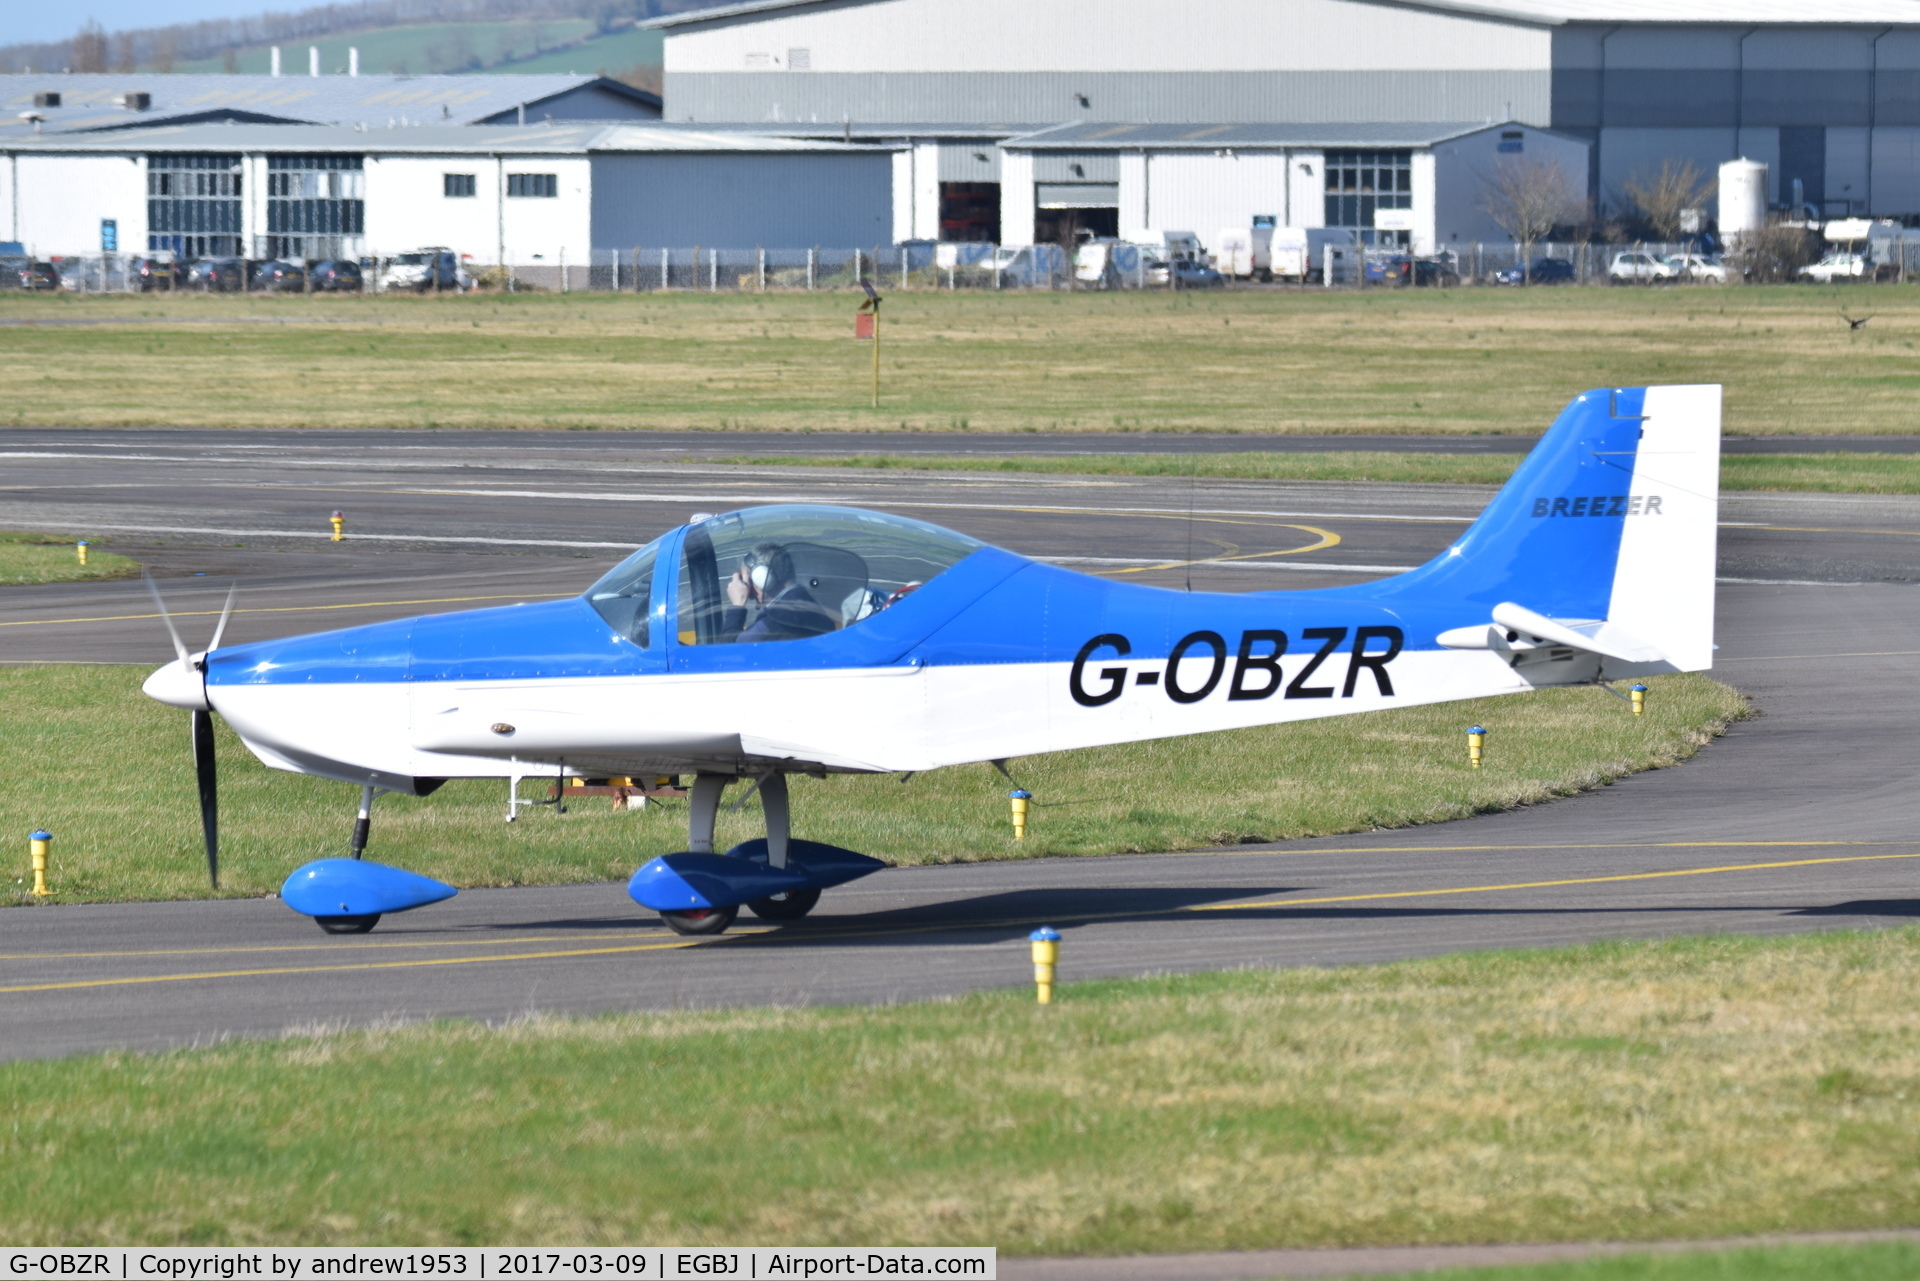 G-OBZR, 2011 Breezer B600 C/N 019LSA, G-OBZR at Gloucestershire Airport.